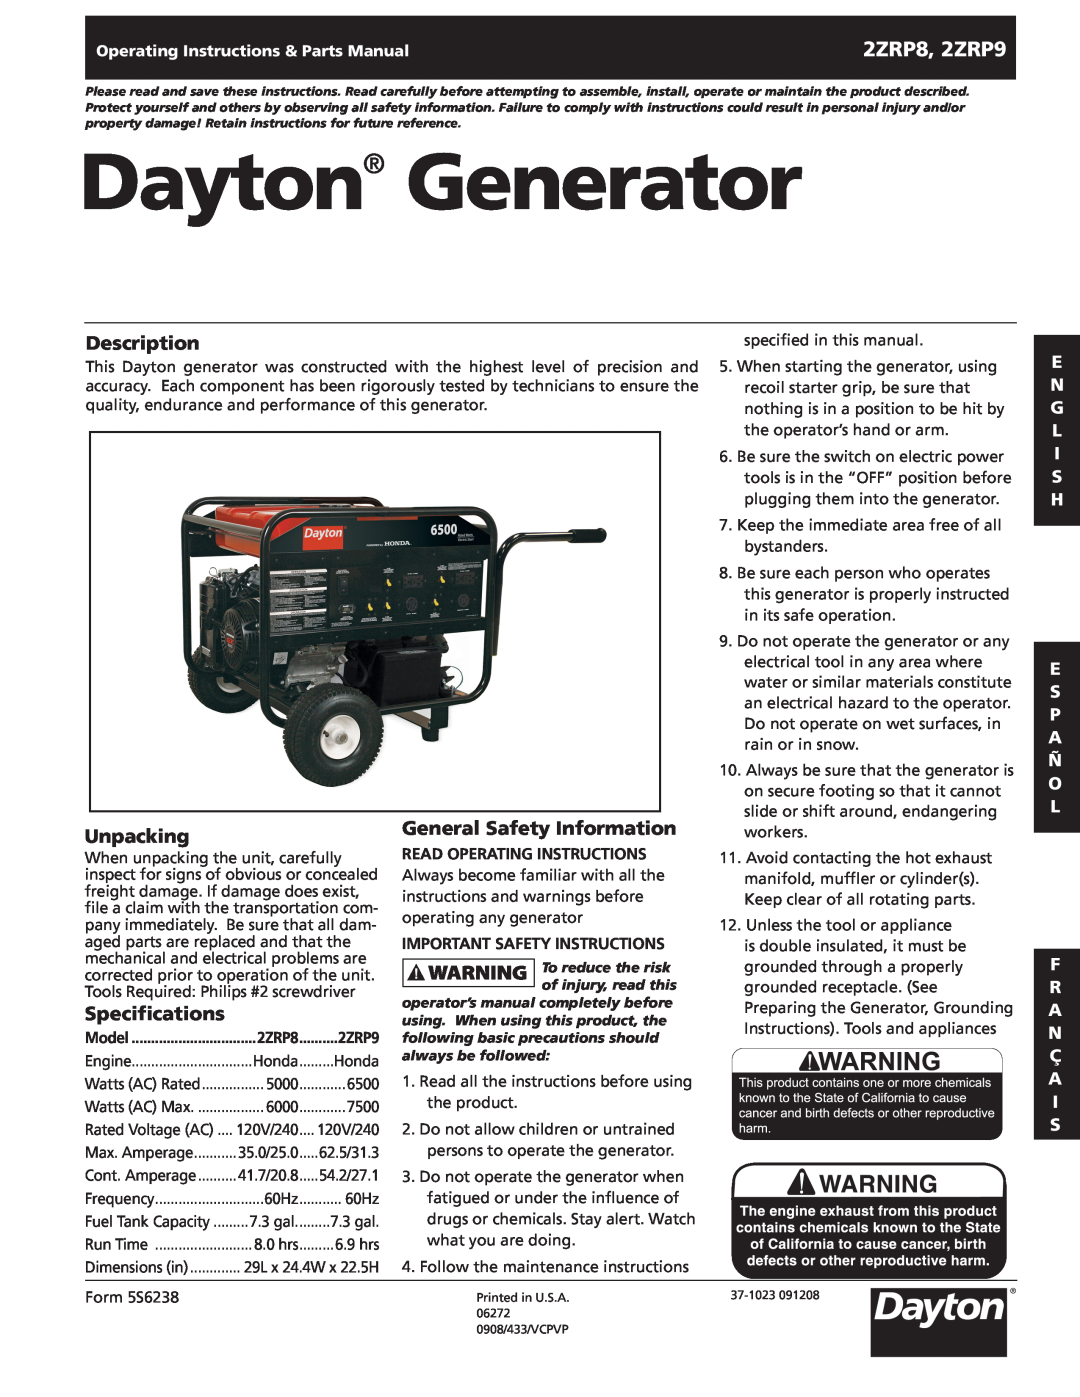 Dayton specifications Dayton Generator, 2ZRP8, 2ZRP9, Description, General Safety Information, Unpacking 